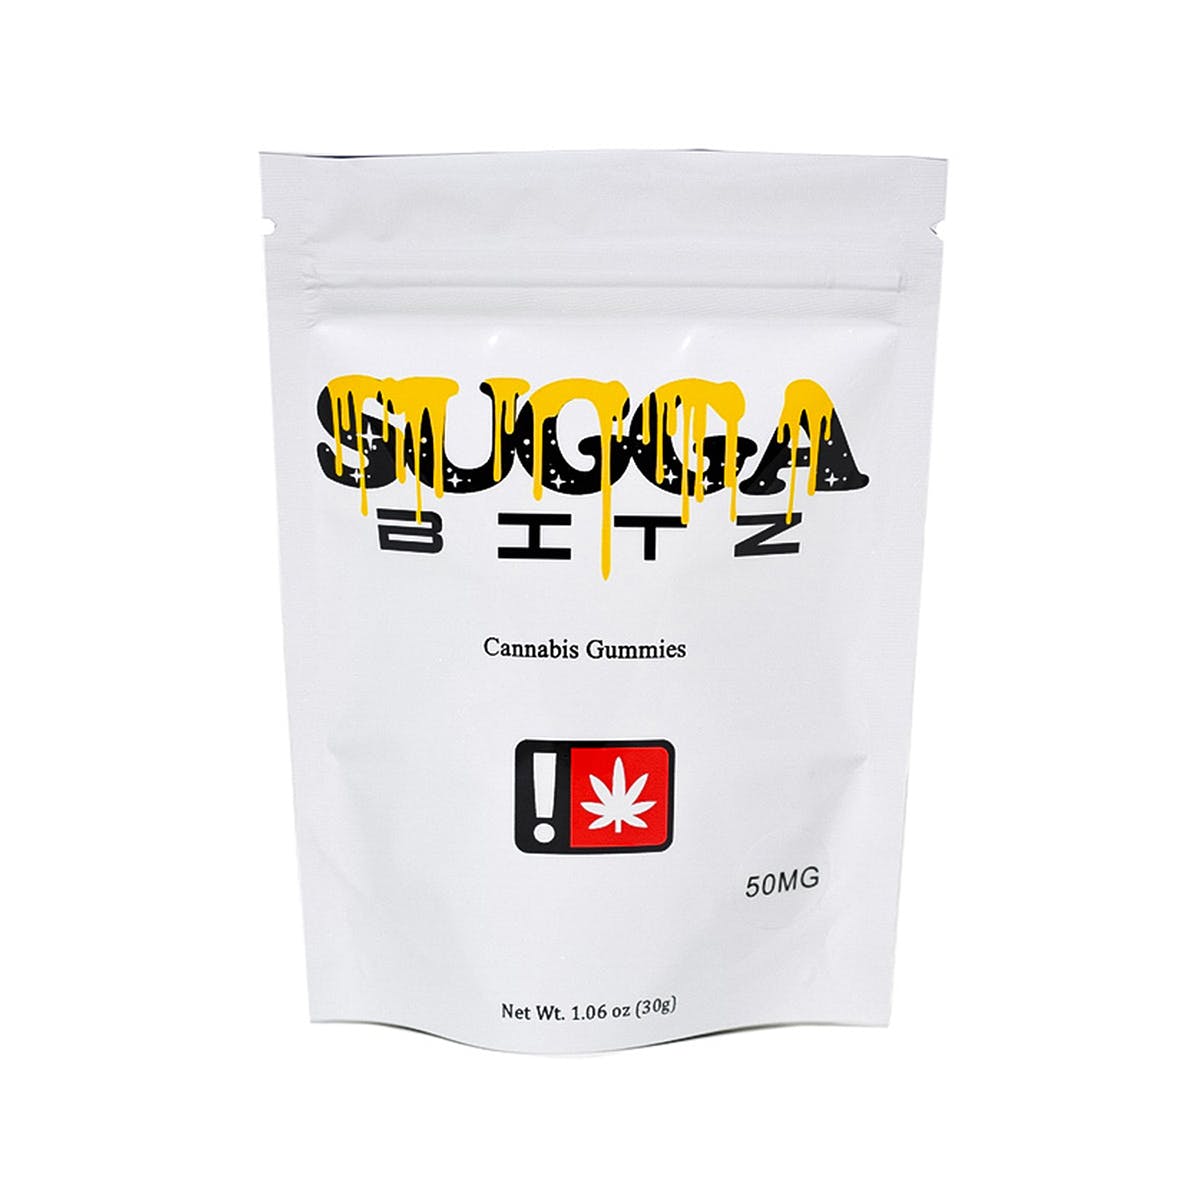 marijuana-dispensaries-kings-of-canna-in-portland-sugga-bitz-50mg